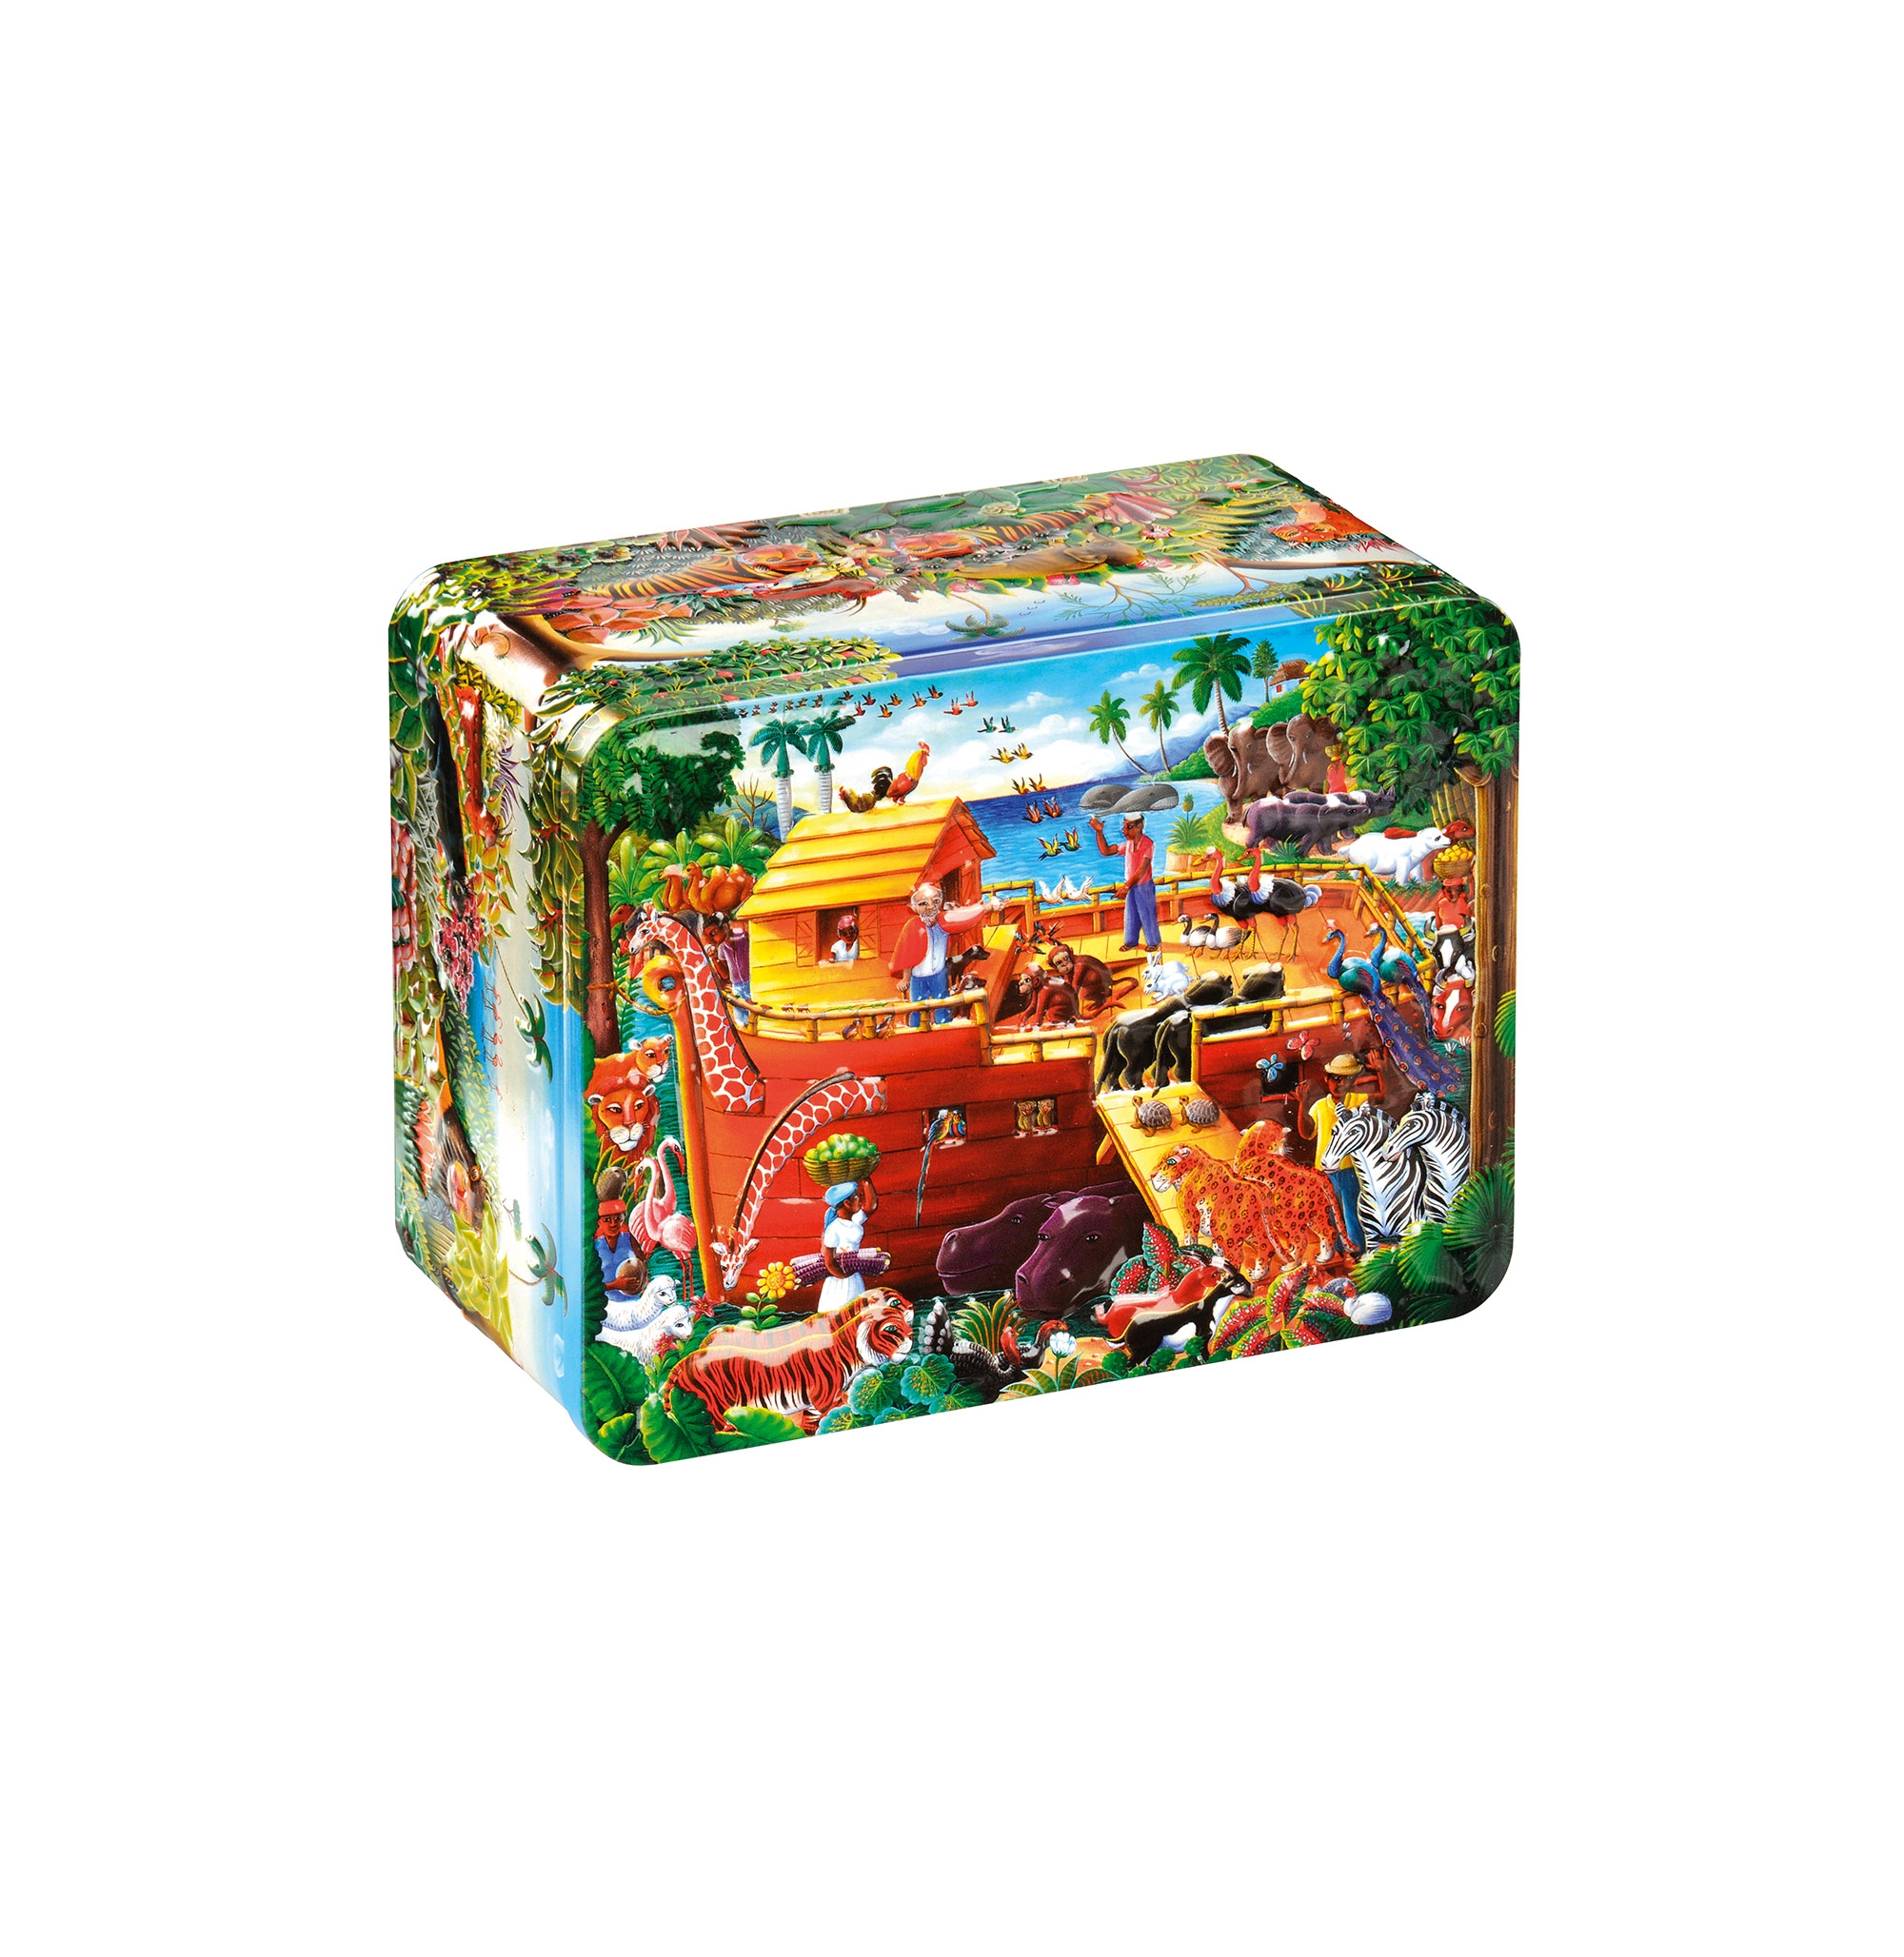 Noah’s Ark – 300g Luxury Jellies & 100 piece jigsaw puzzle – Churchills Confectionary